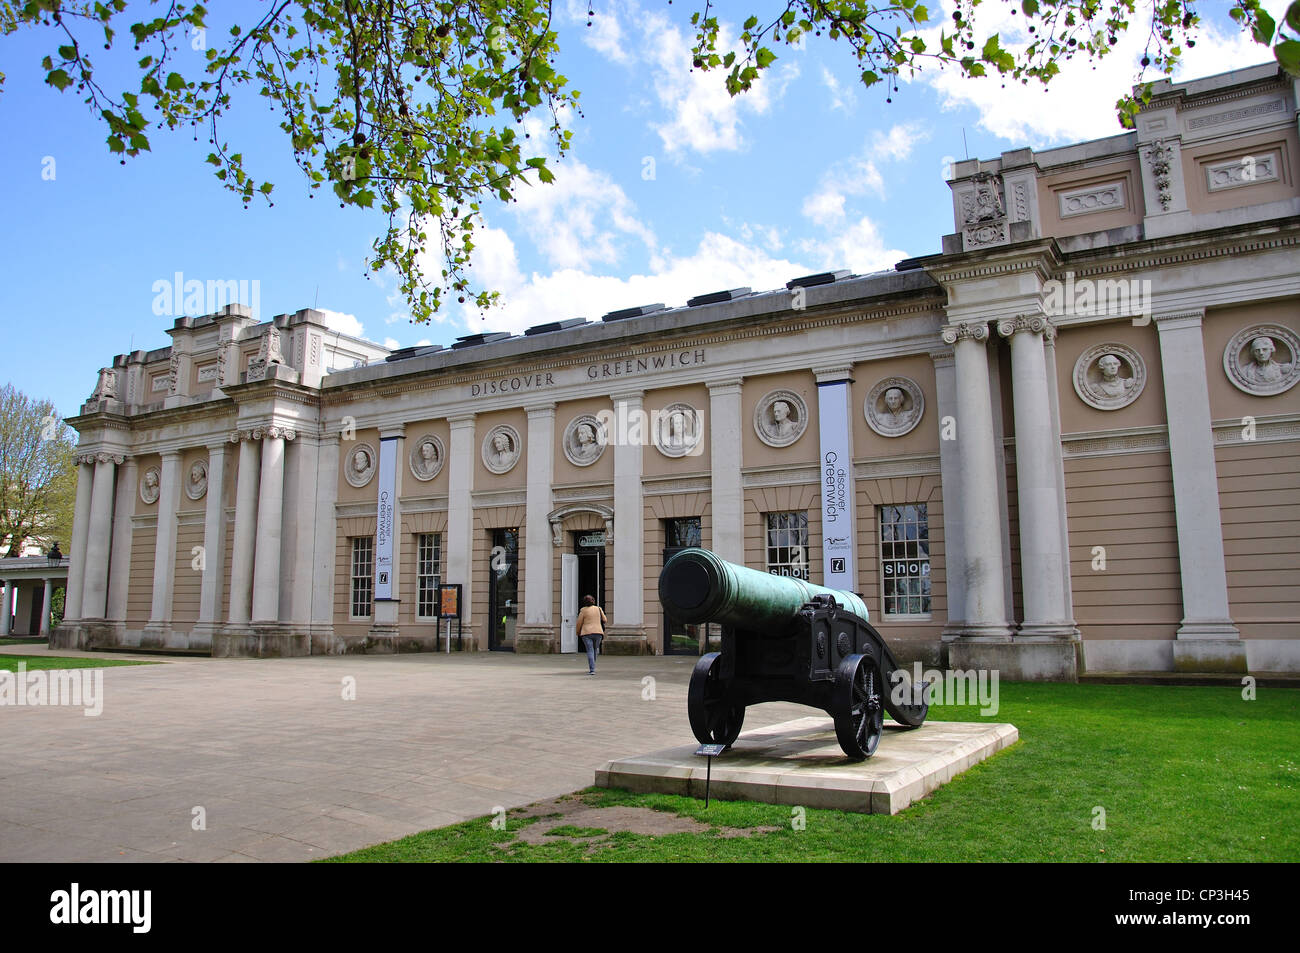 Discover Greenwich Visitor Centre, Greenwich, Borough of Greenwich, London, England, United Kingdom Stock Photo